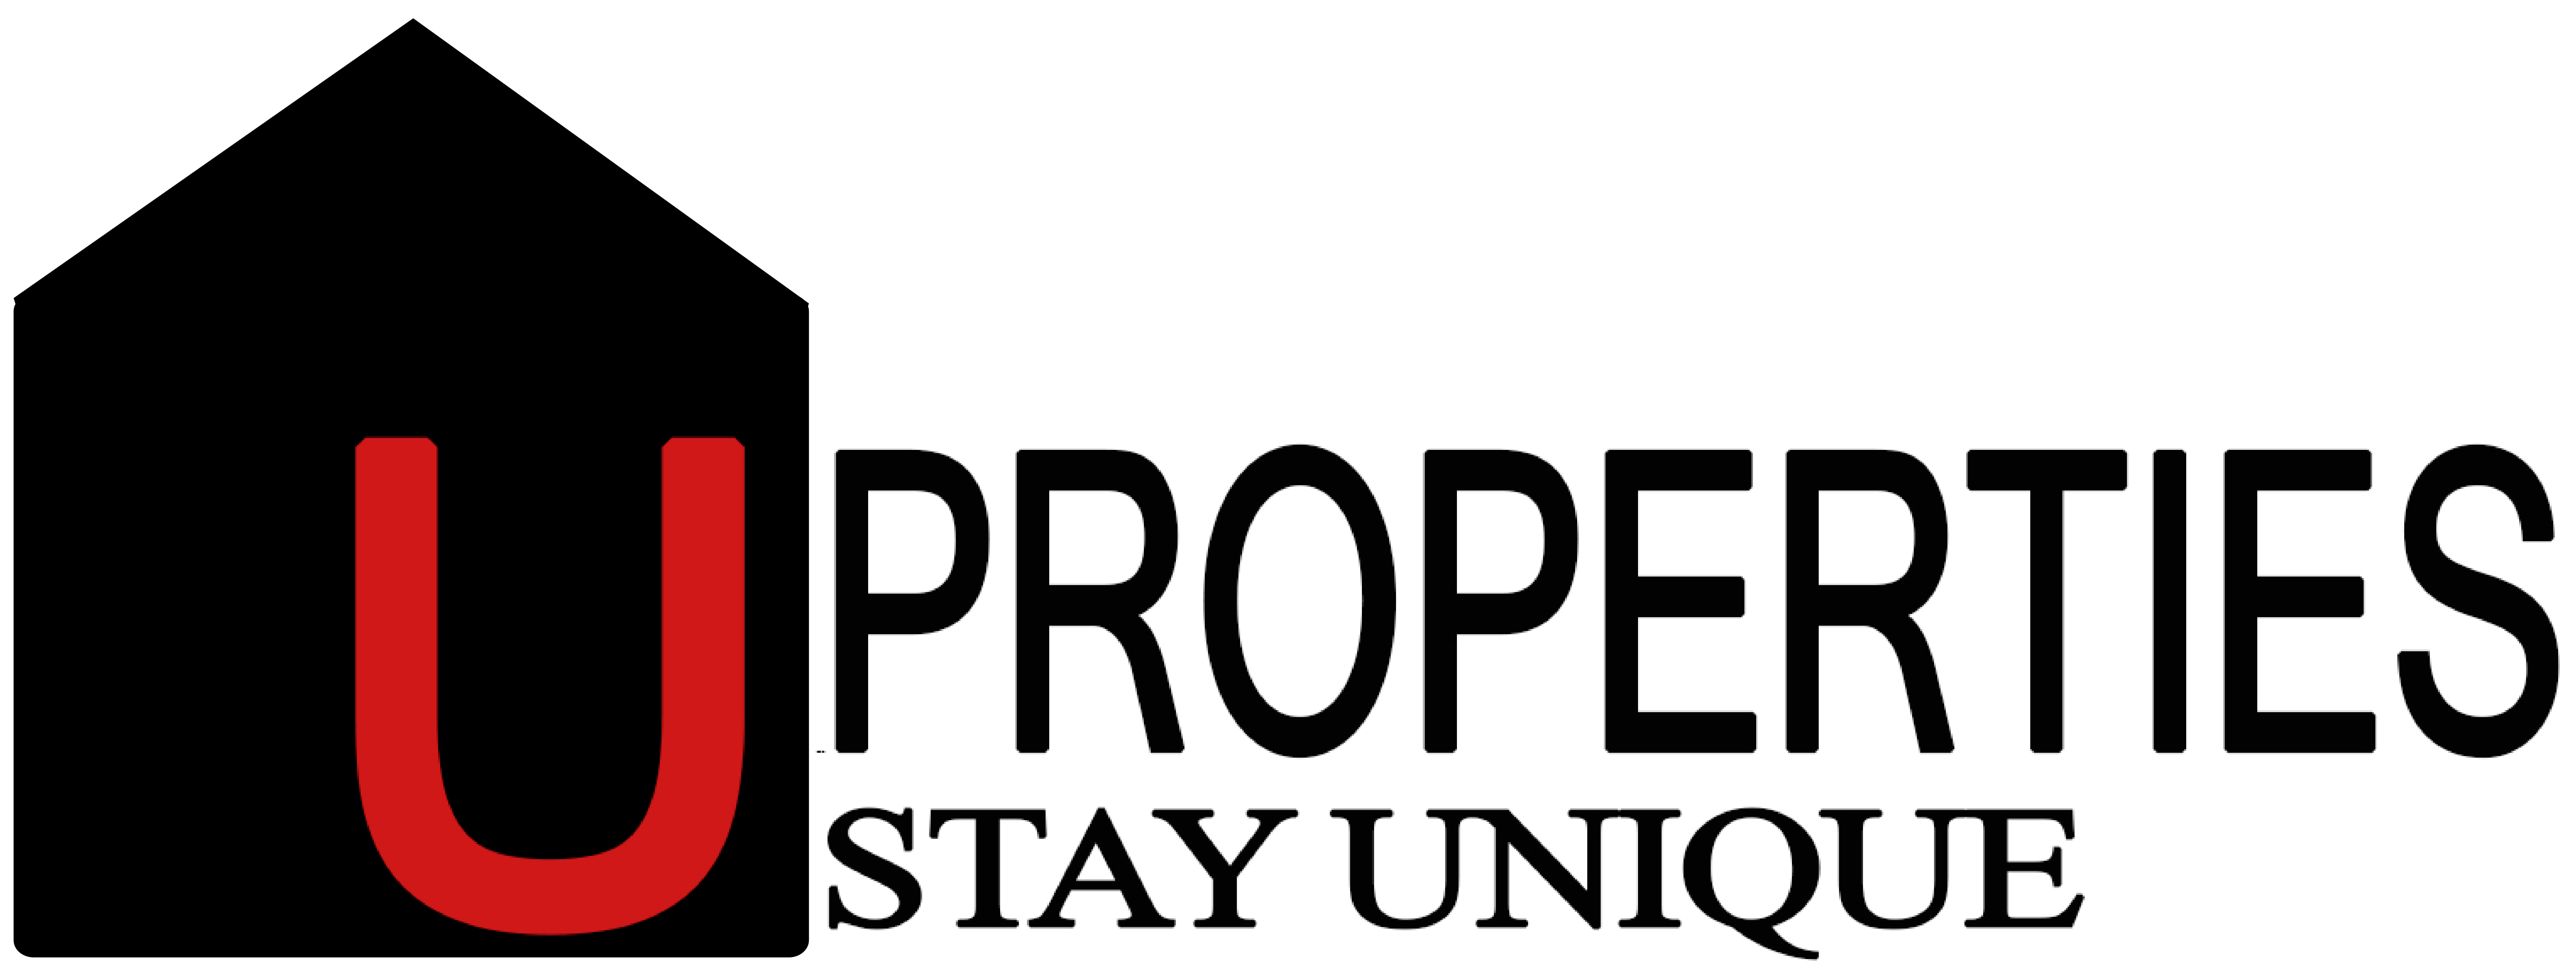 Unique Properties logo